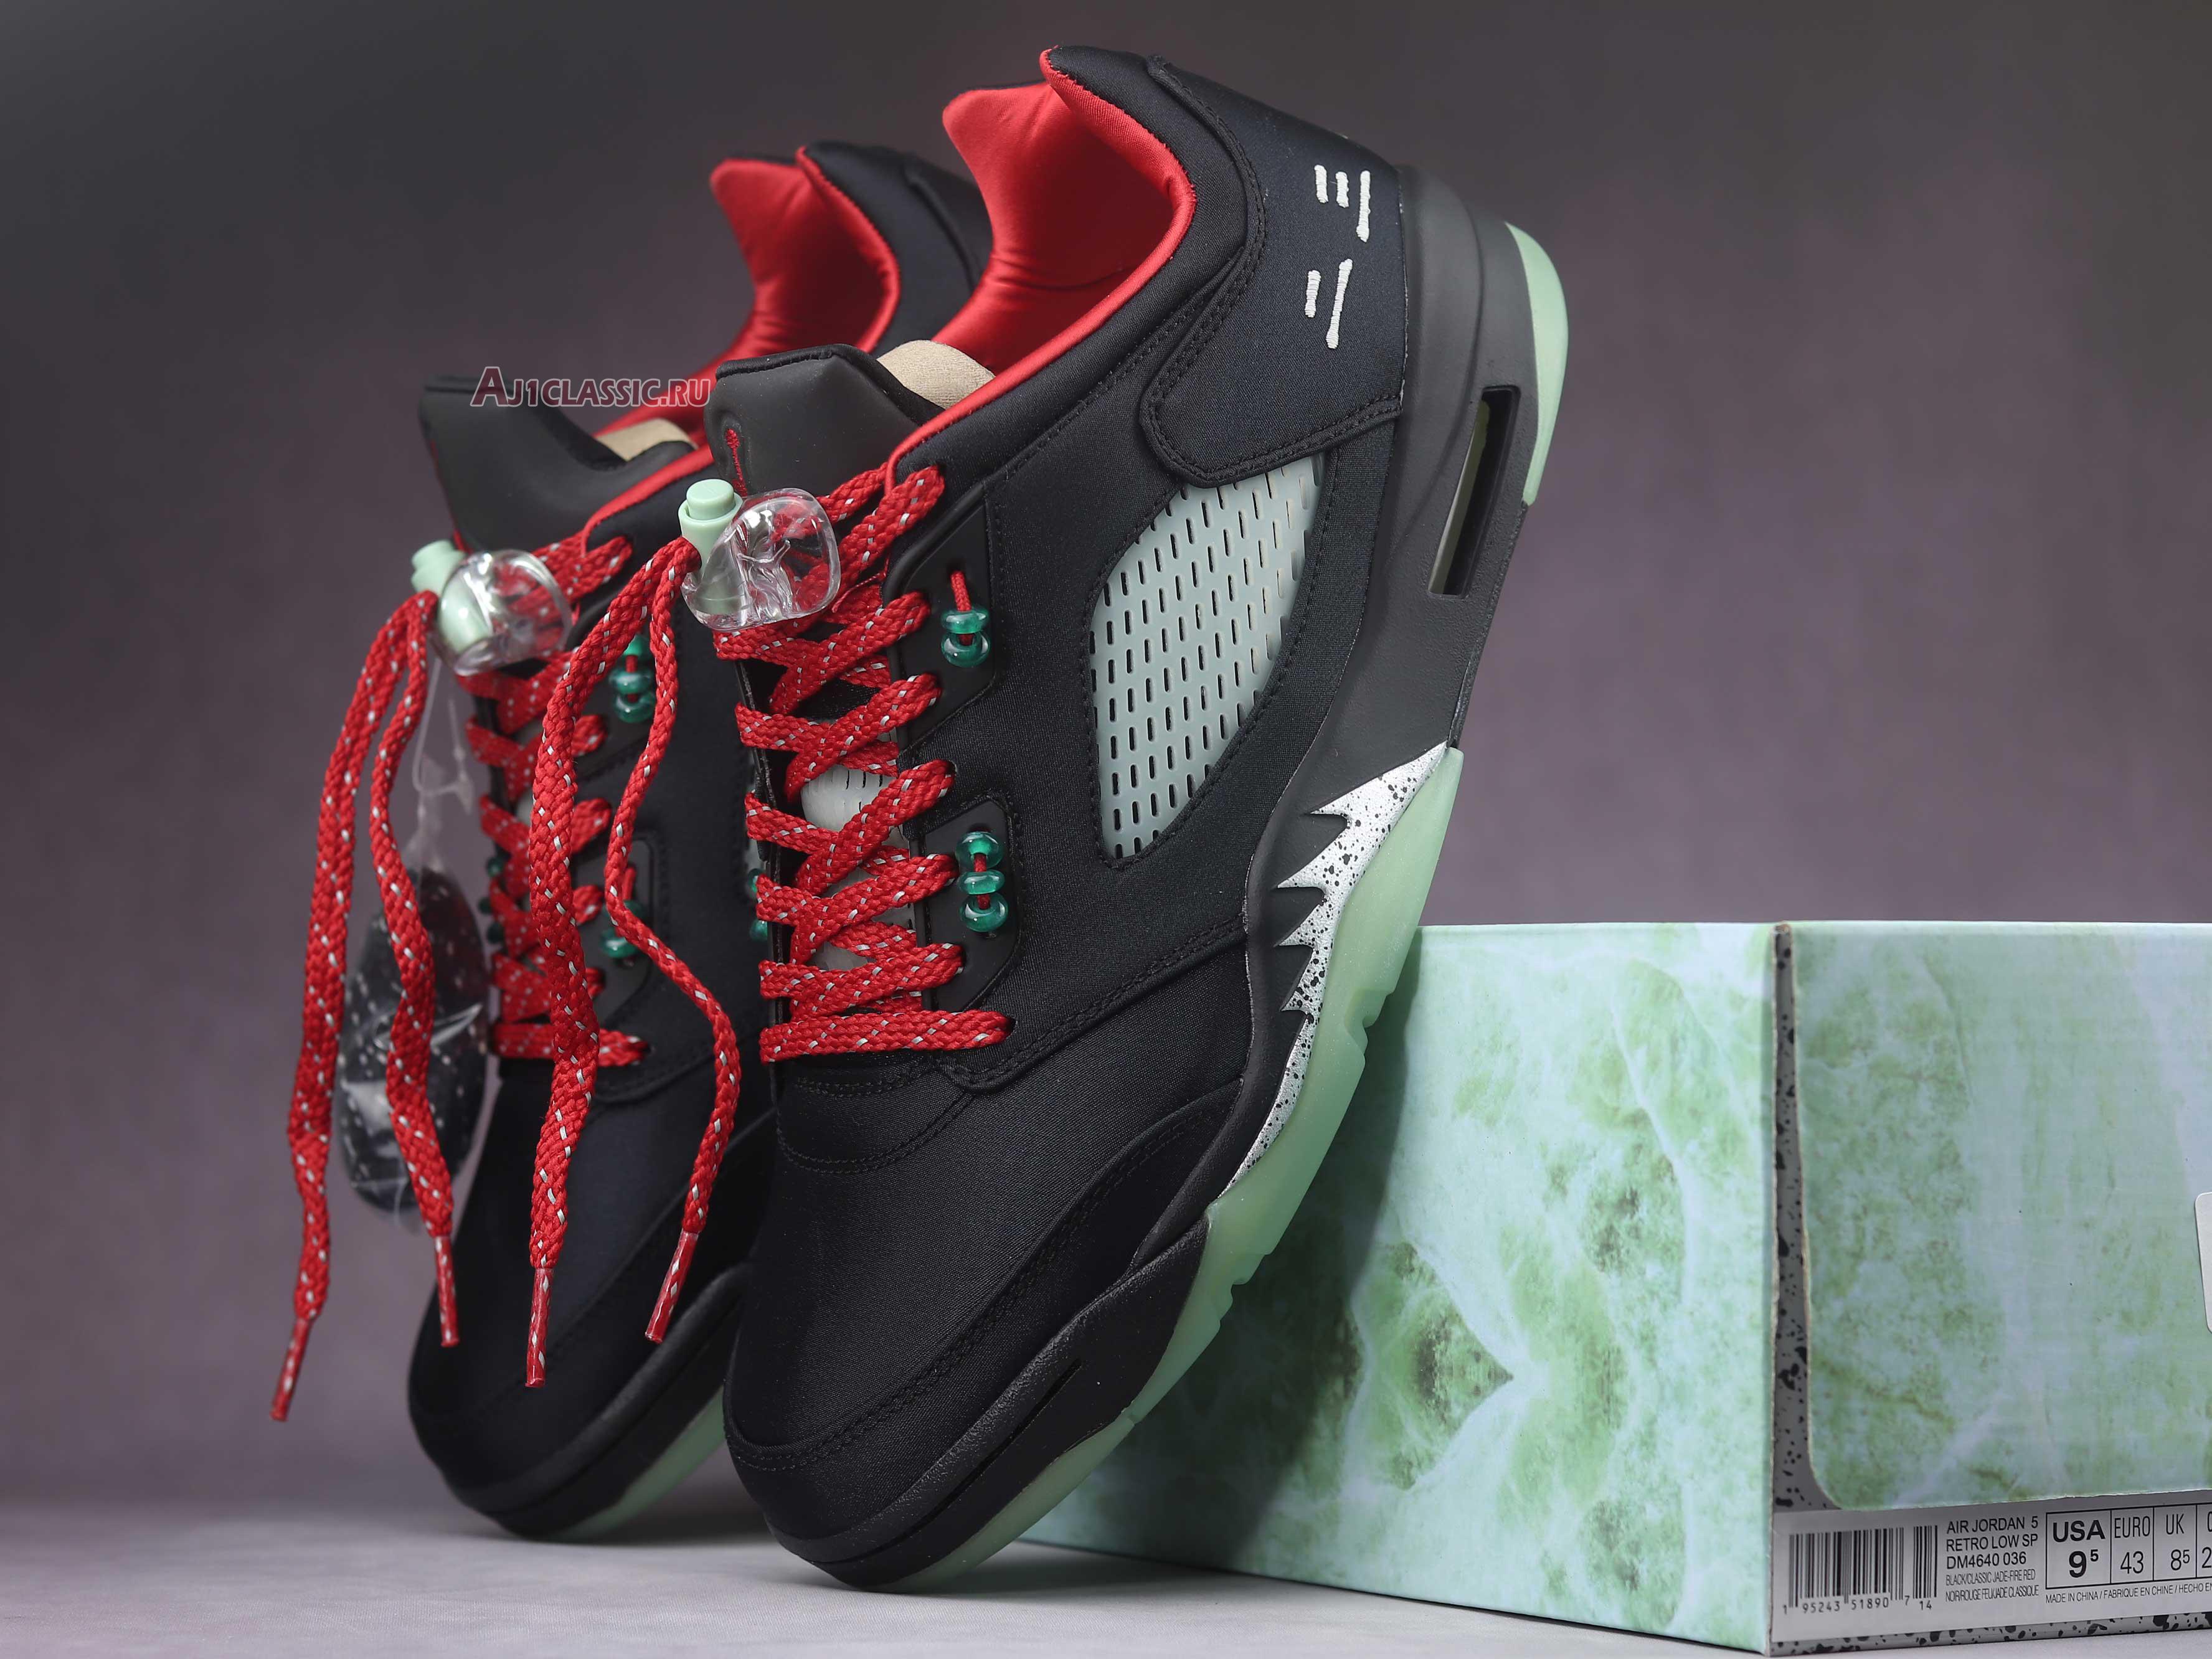 CLOT x Air Jordan 5 Low SP DD9336-400 Black/Classic Jade-Fire Red-Metallic Silver Sneakers